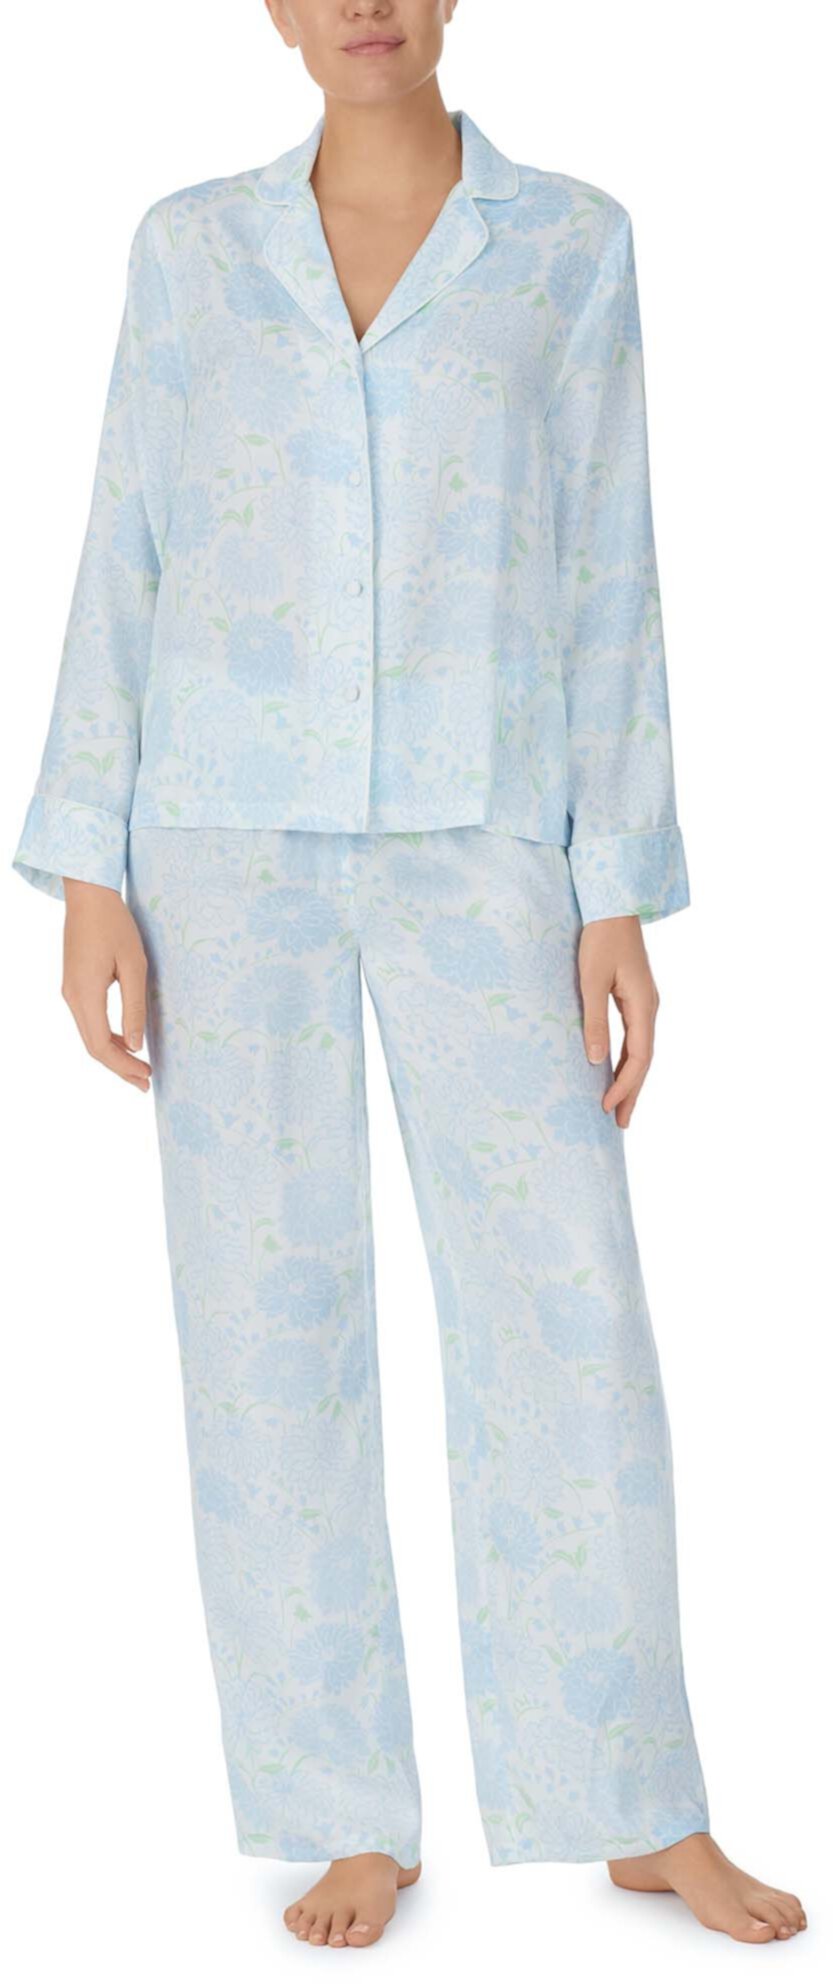 Пижама с длинными рукавами Charmuese Kate Spade New York